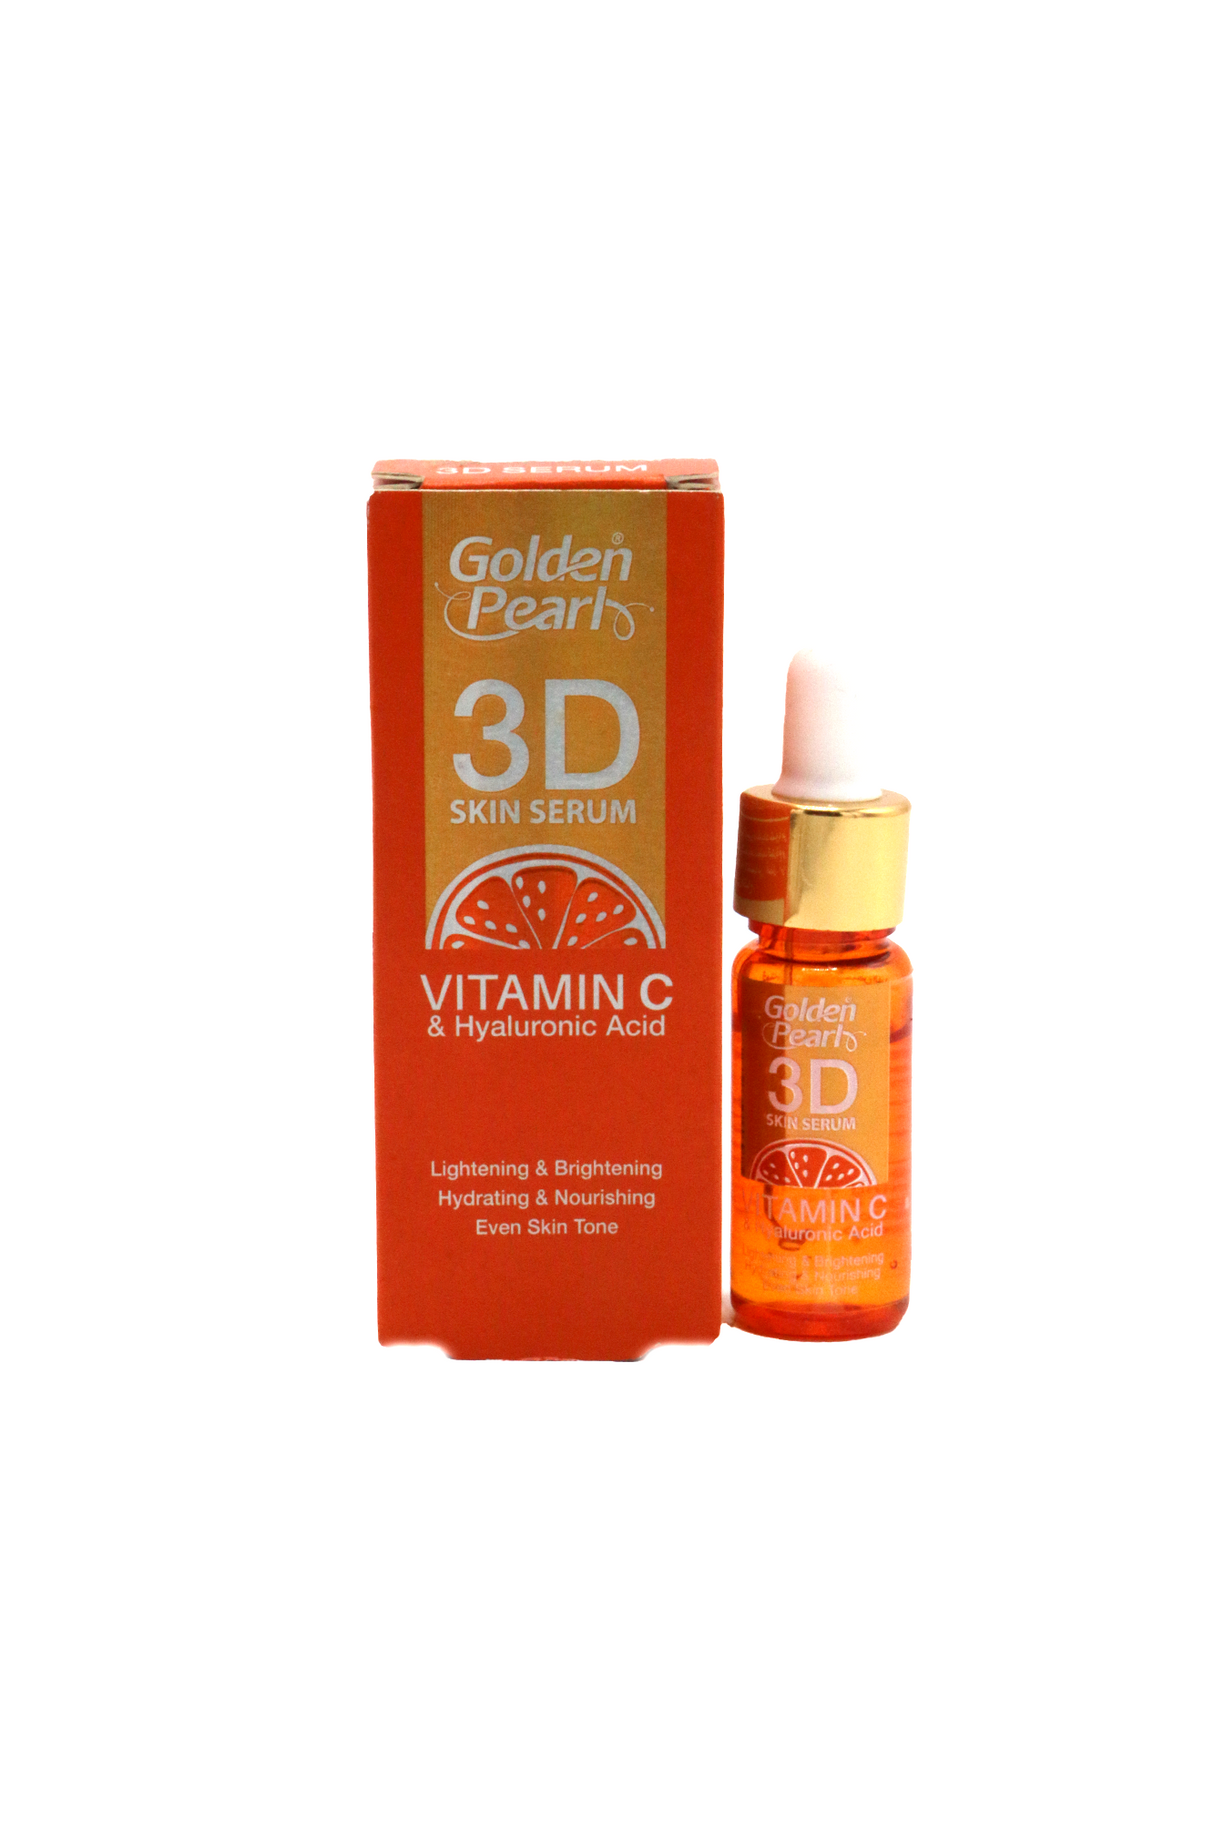 golden pearl serum 3d vitamin c&hyaluronic 10ml